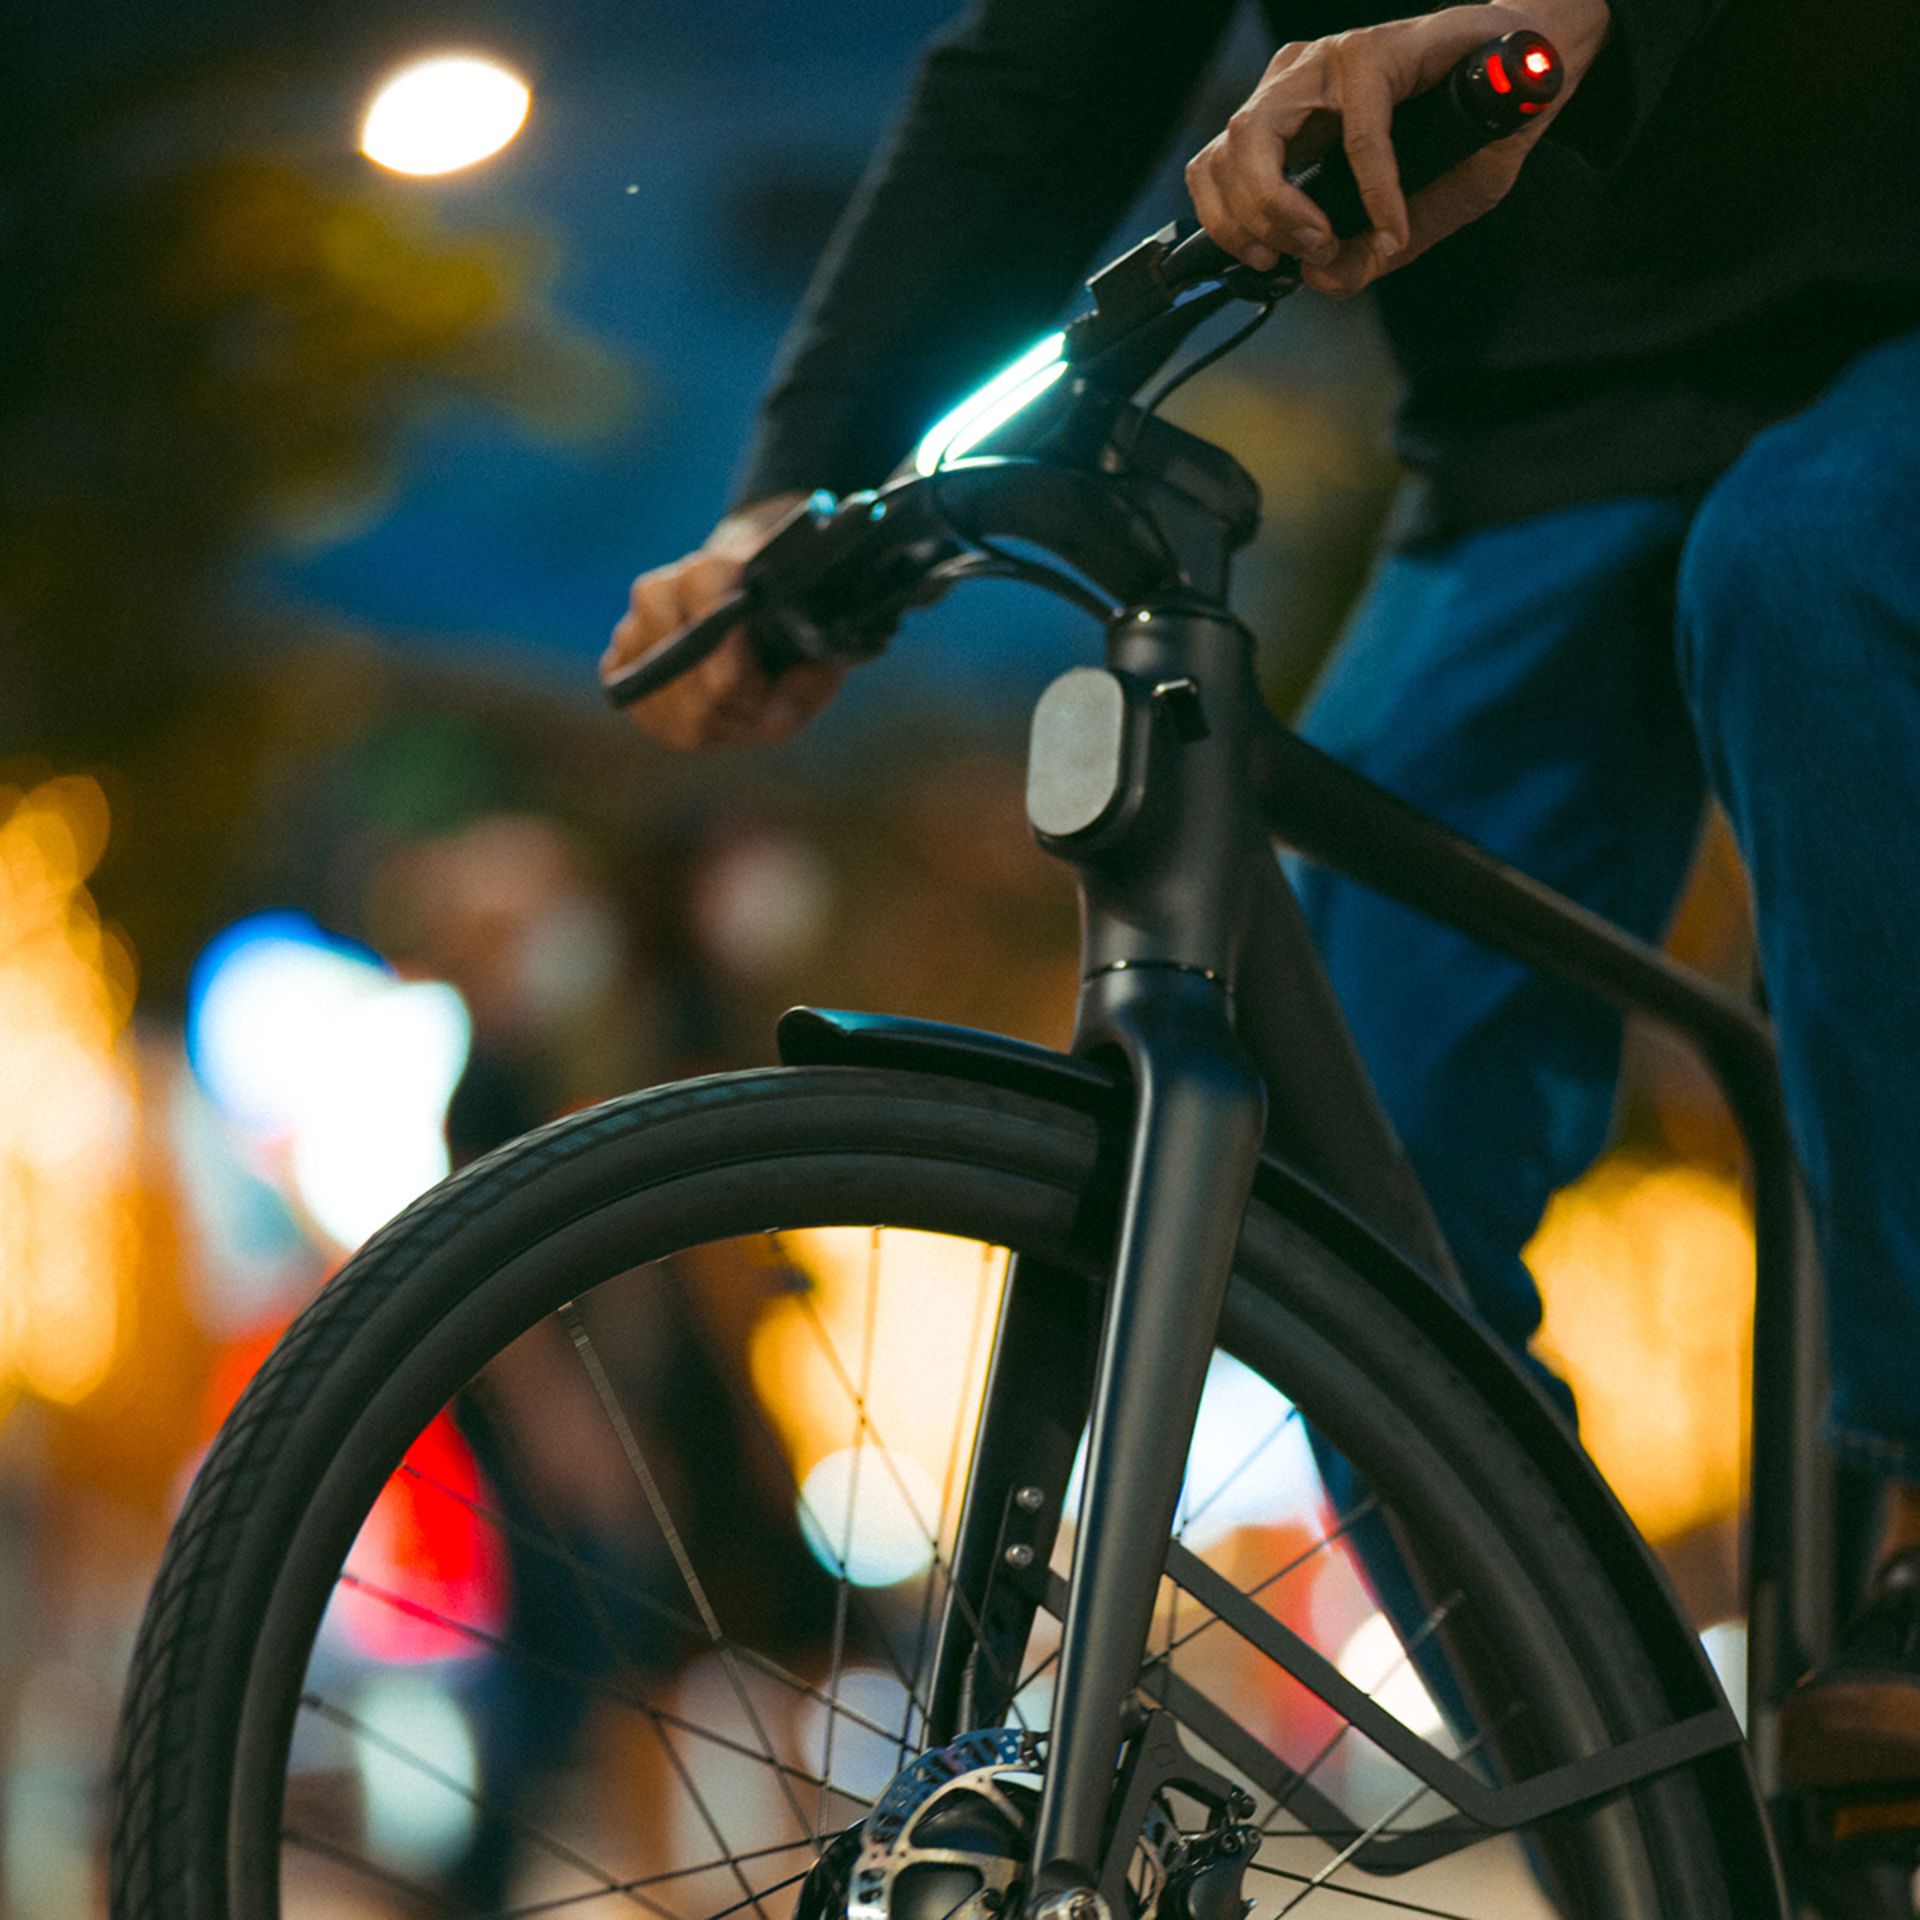 Modmo Saigon+ Electric Bicycle - RRP £2800 - Size M (Rider: 140-155cm) - Image 15 of 19